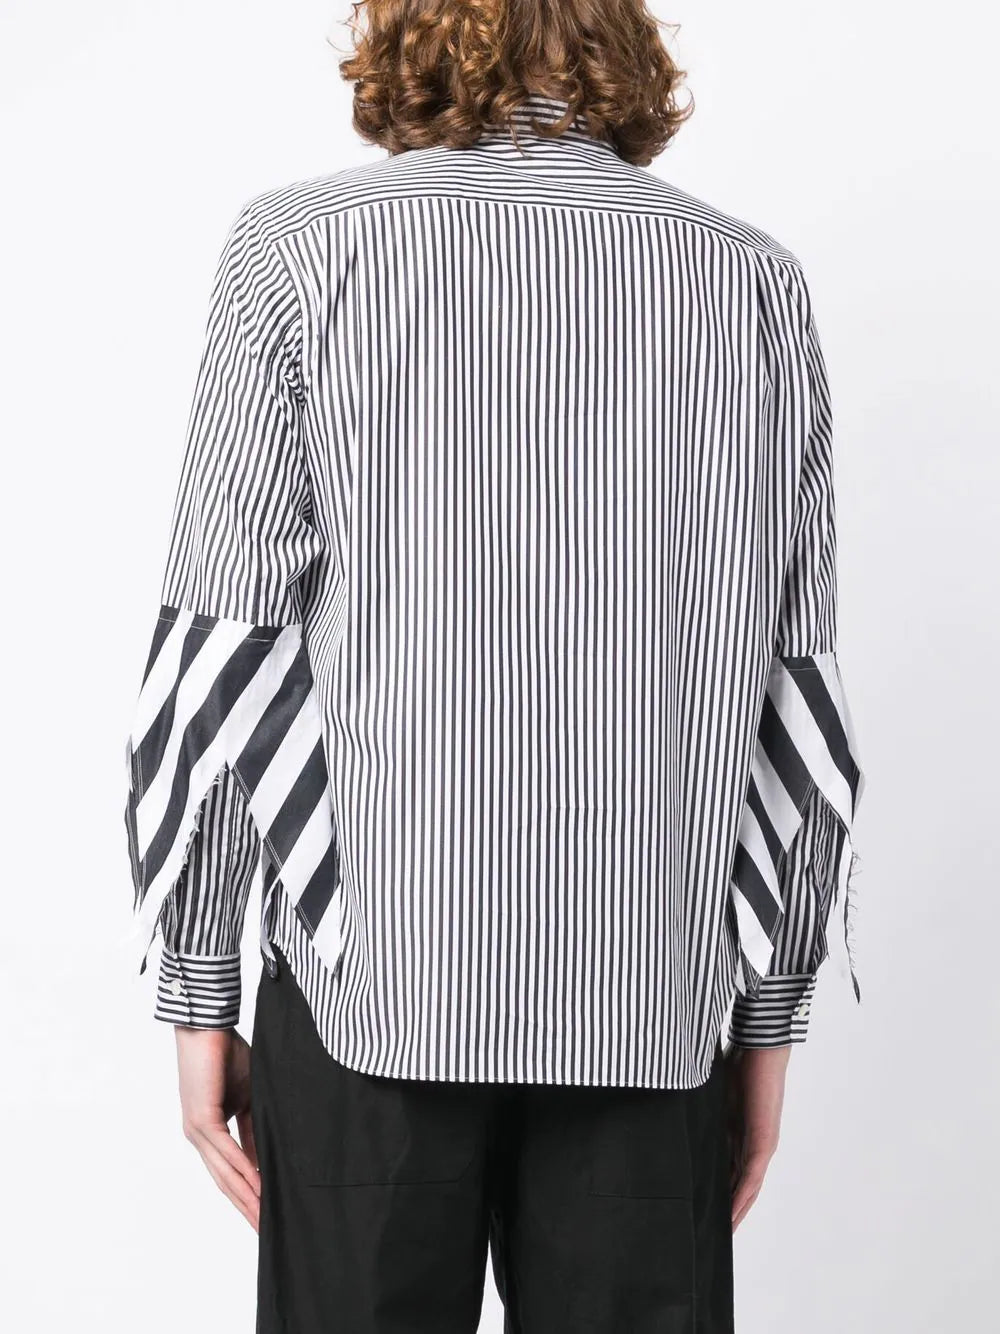 contrasting striped shirt